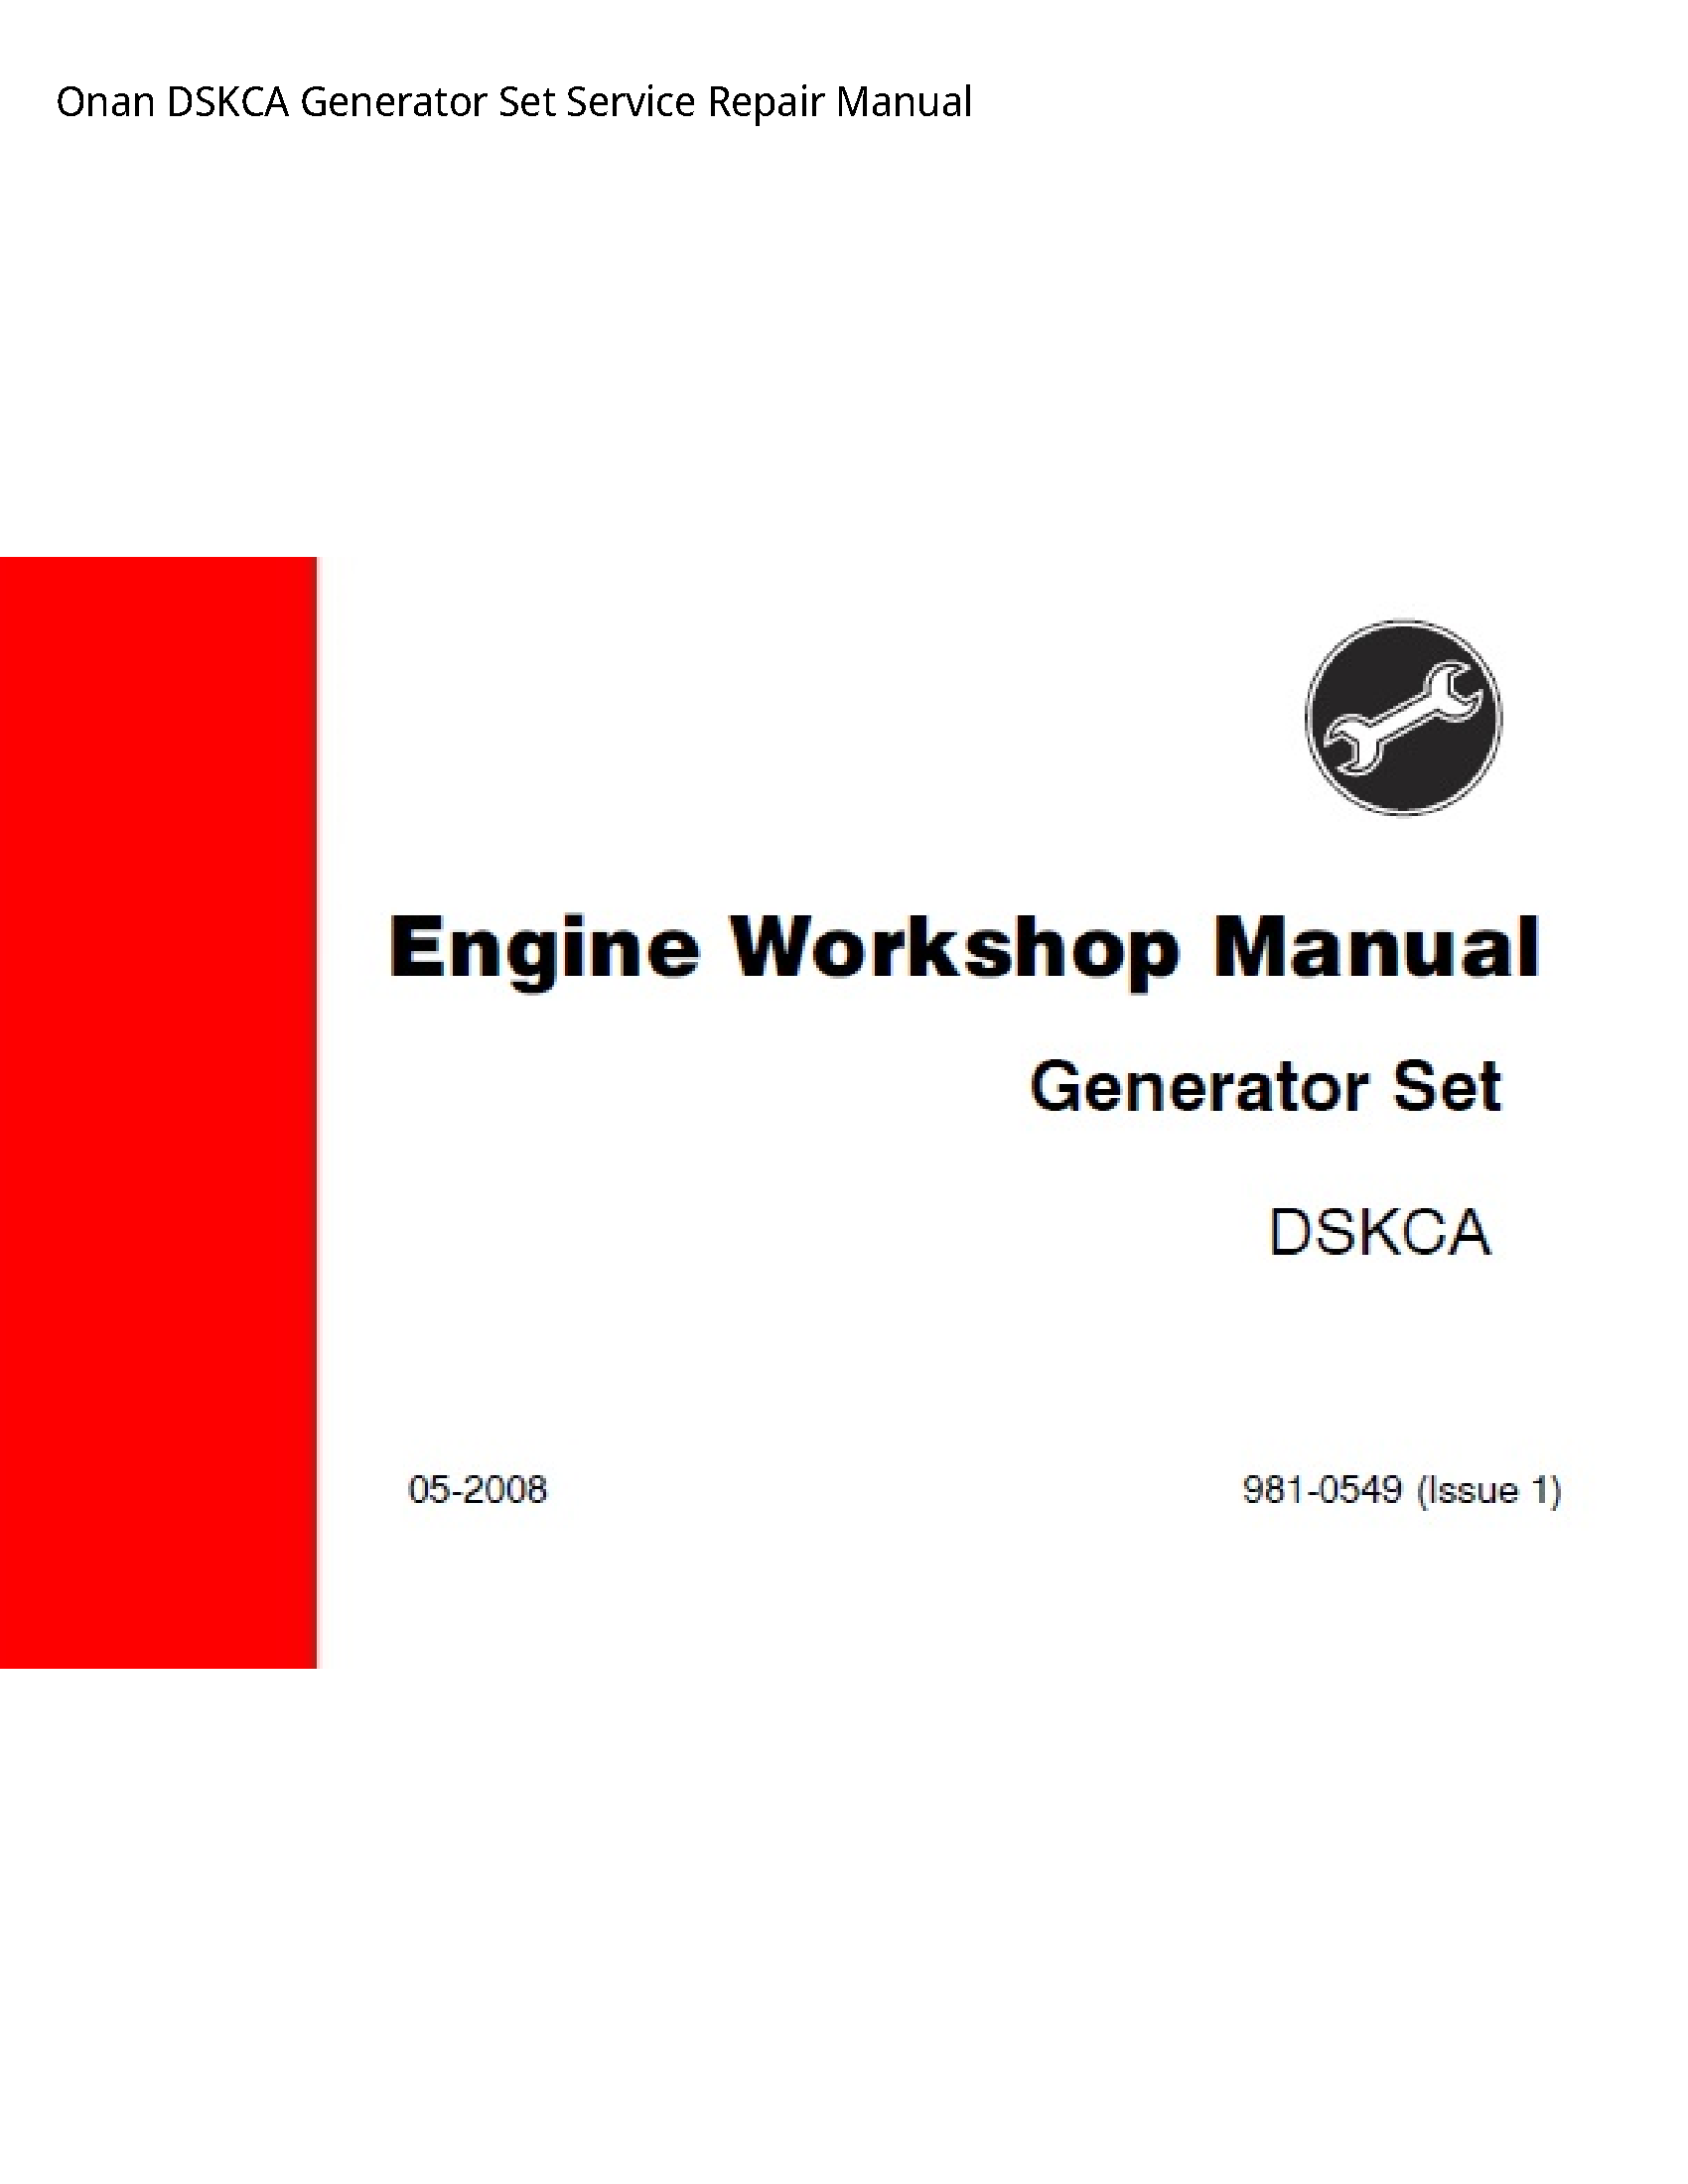 Onan DSKCA Generator Set manual